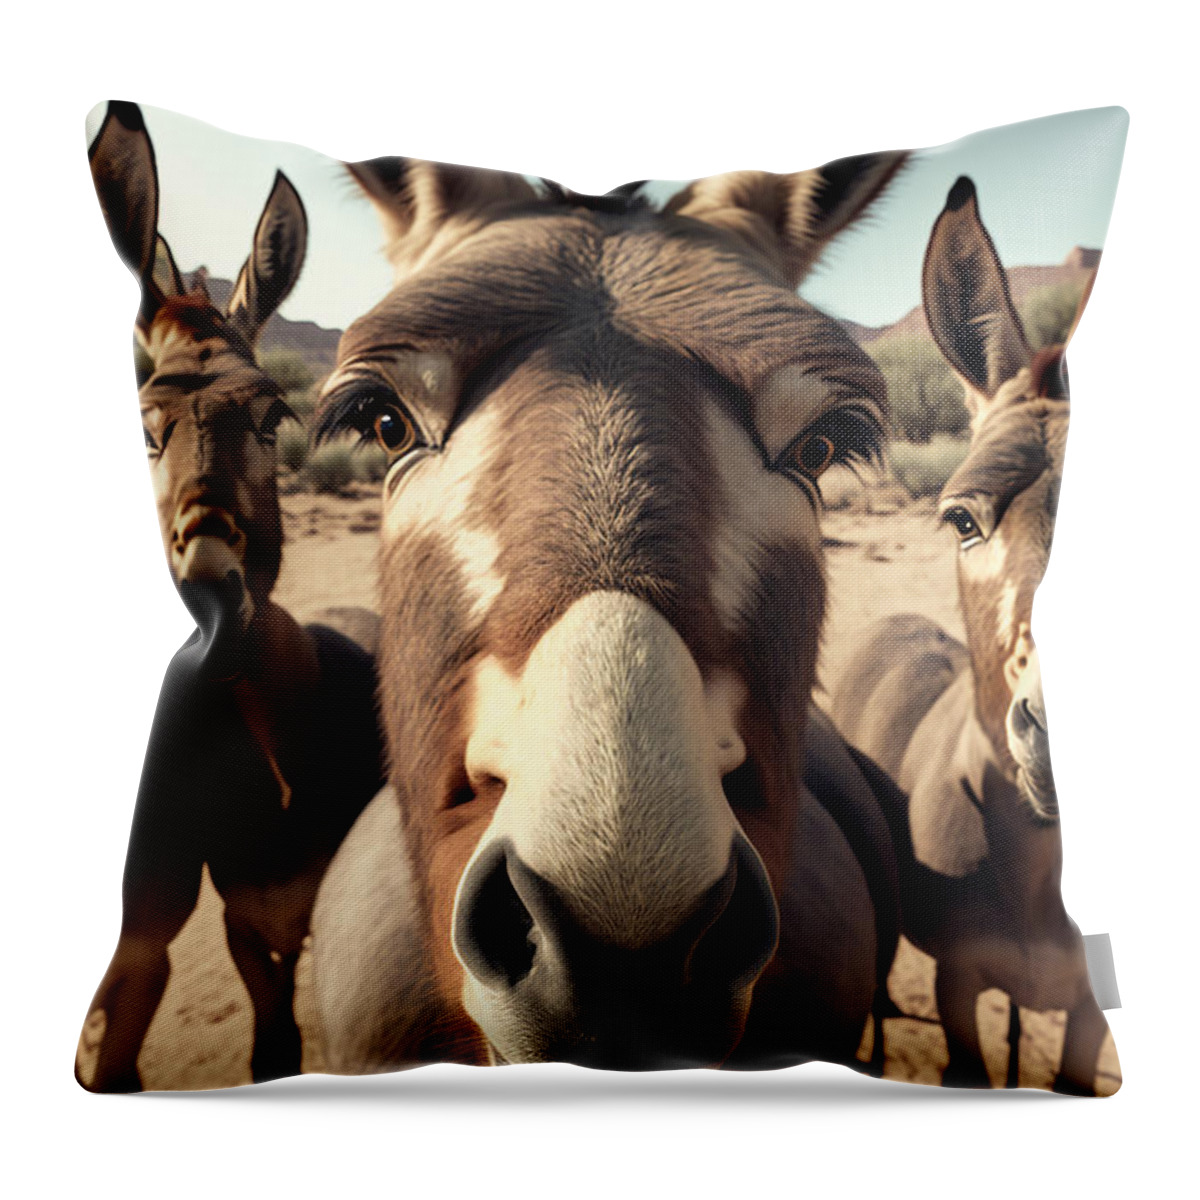 Series Throw Pillow featuring the digital art Donkey selfie #3 by Sabantha